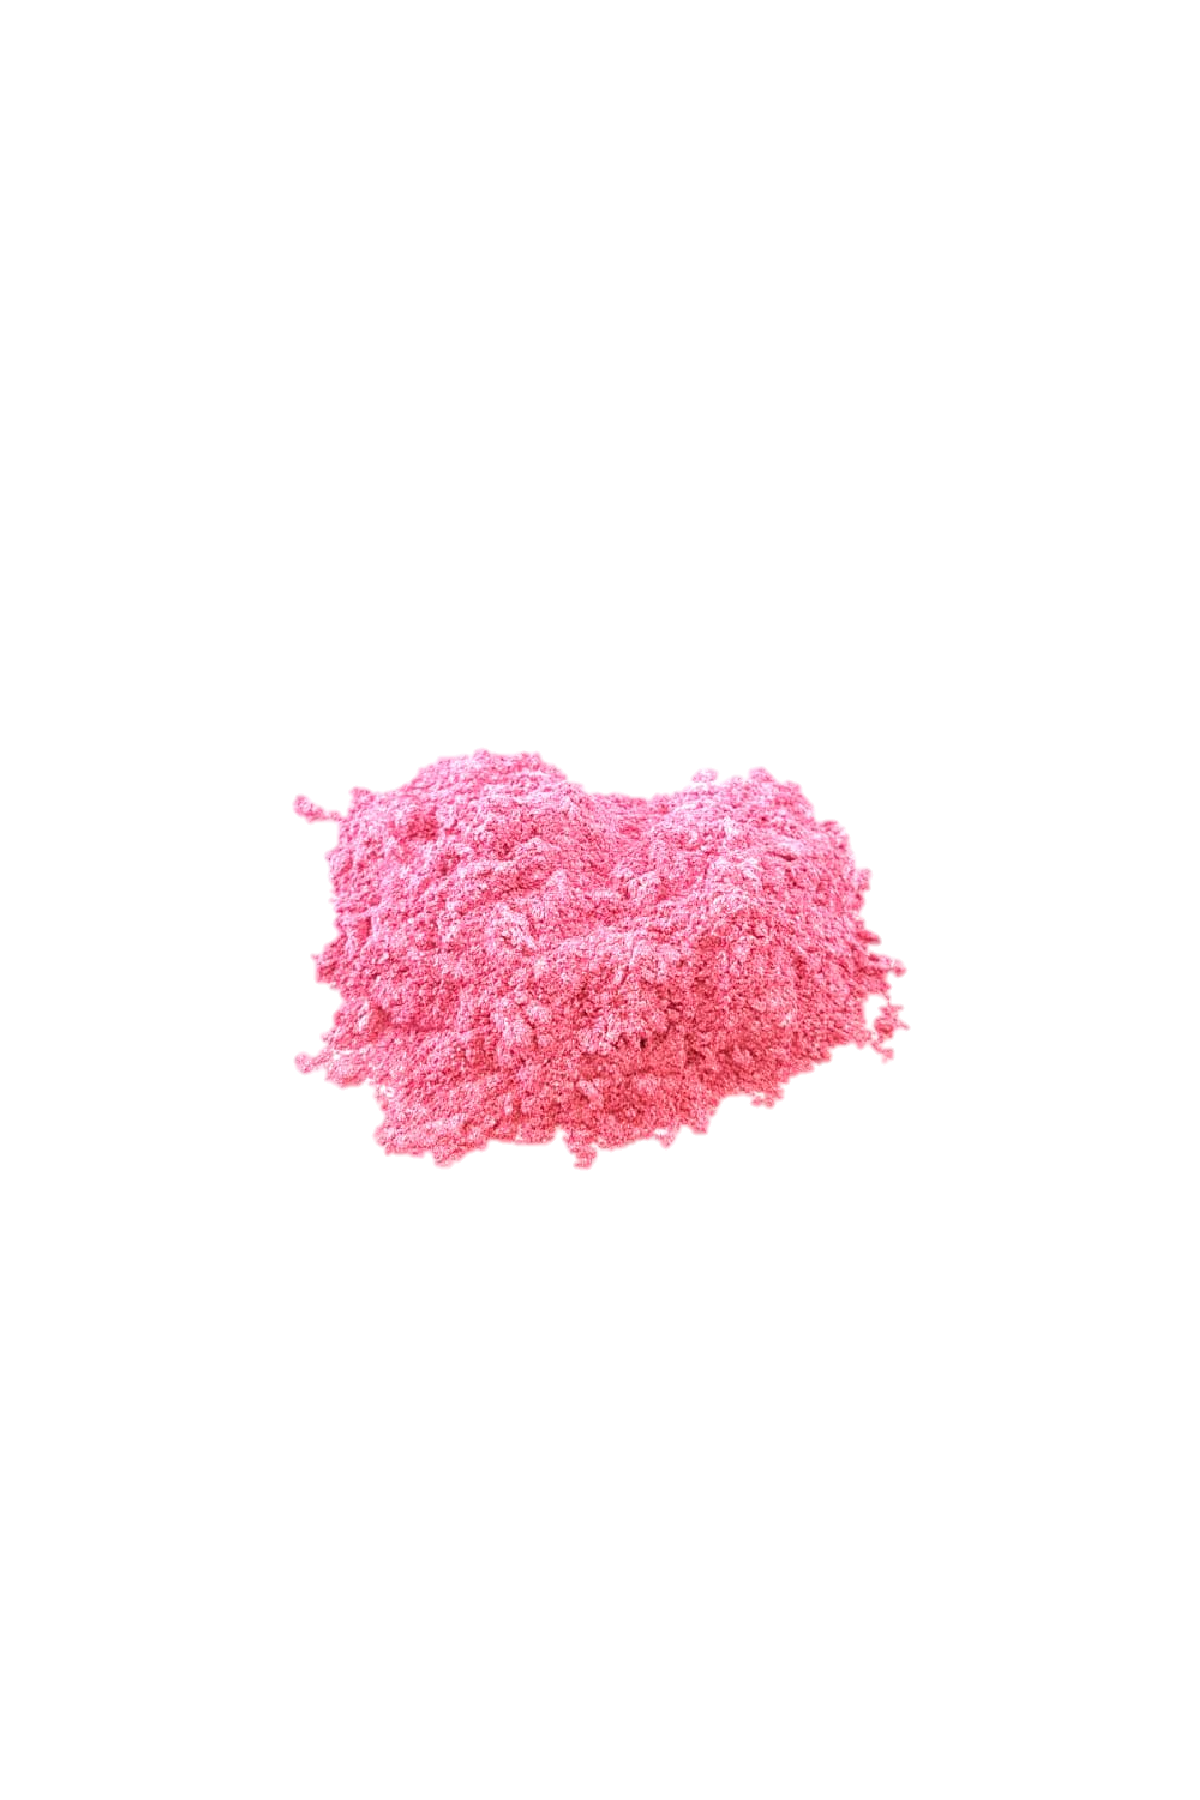 Brtr 10 Gr Baby Pink Epoksi Metalik Toz Pigment (bebek pembe)